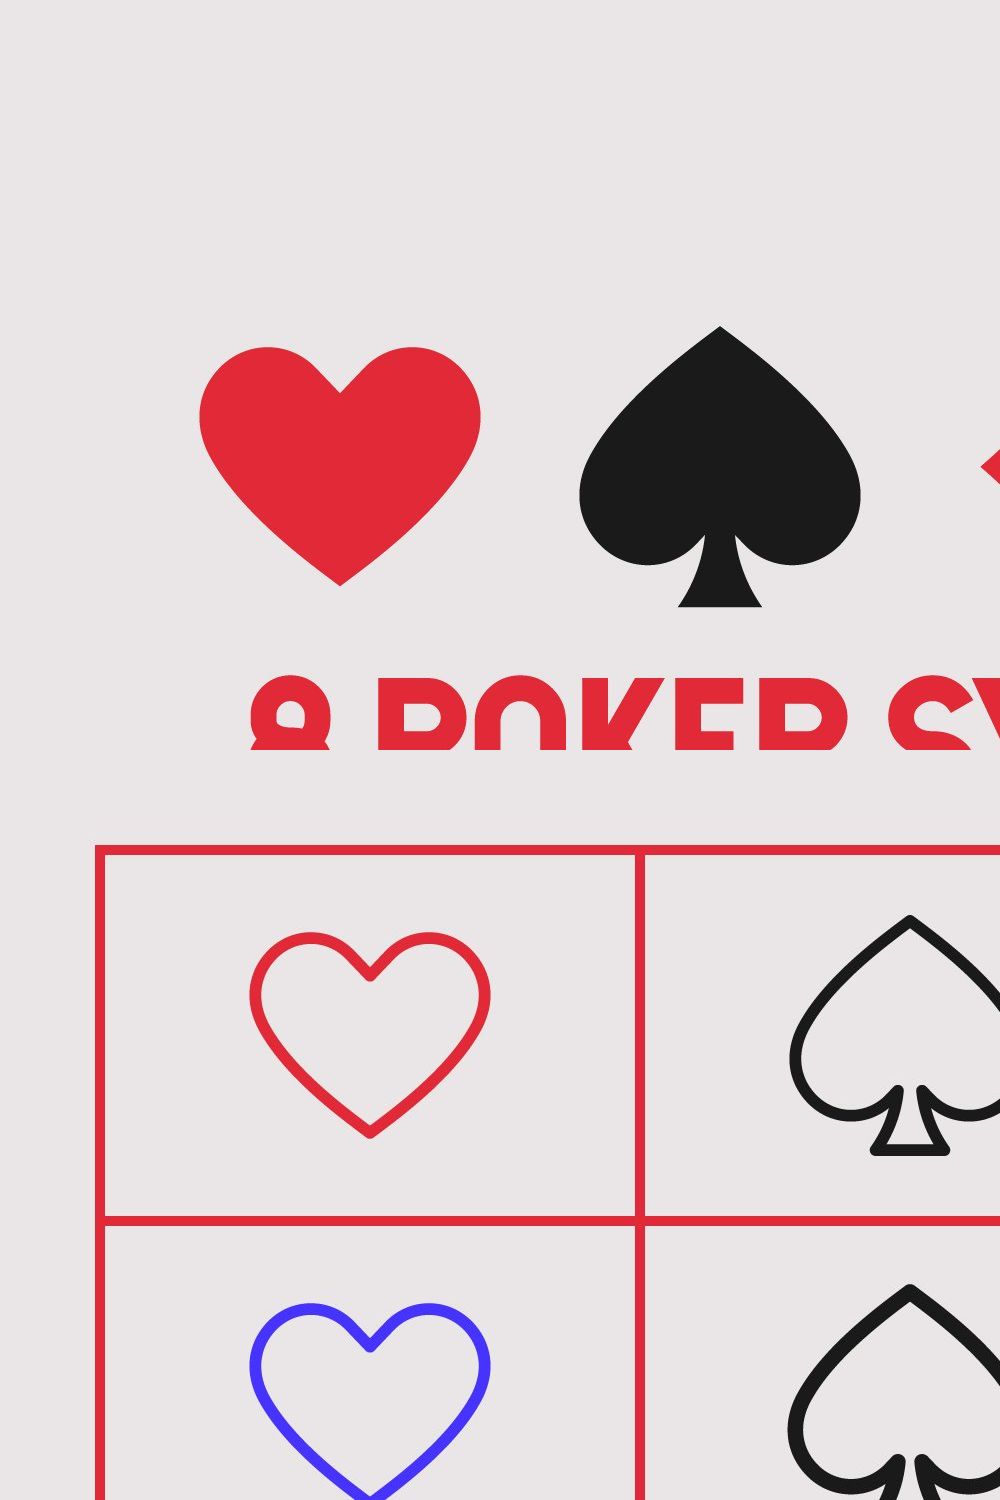 8 Playing Card Poker Symbols Set pinterest preview image.